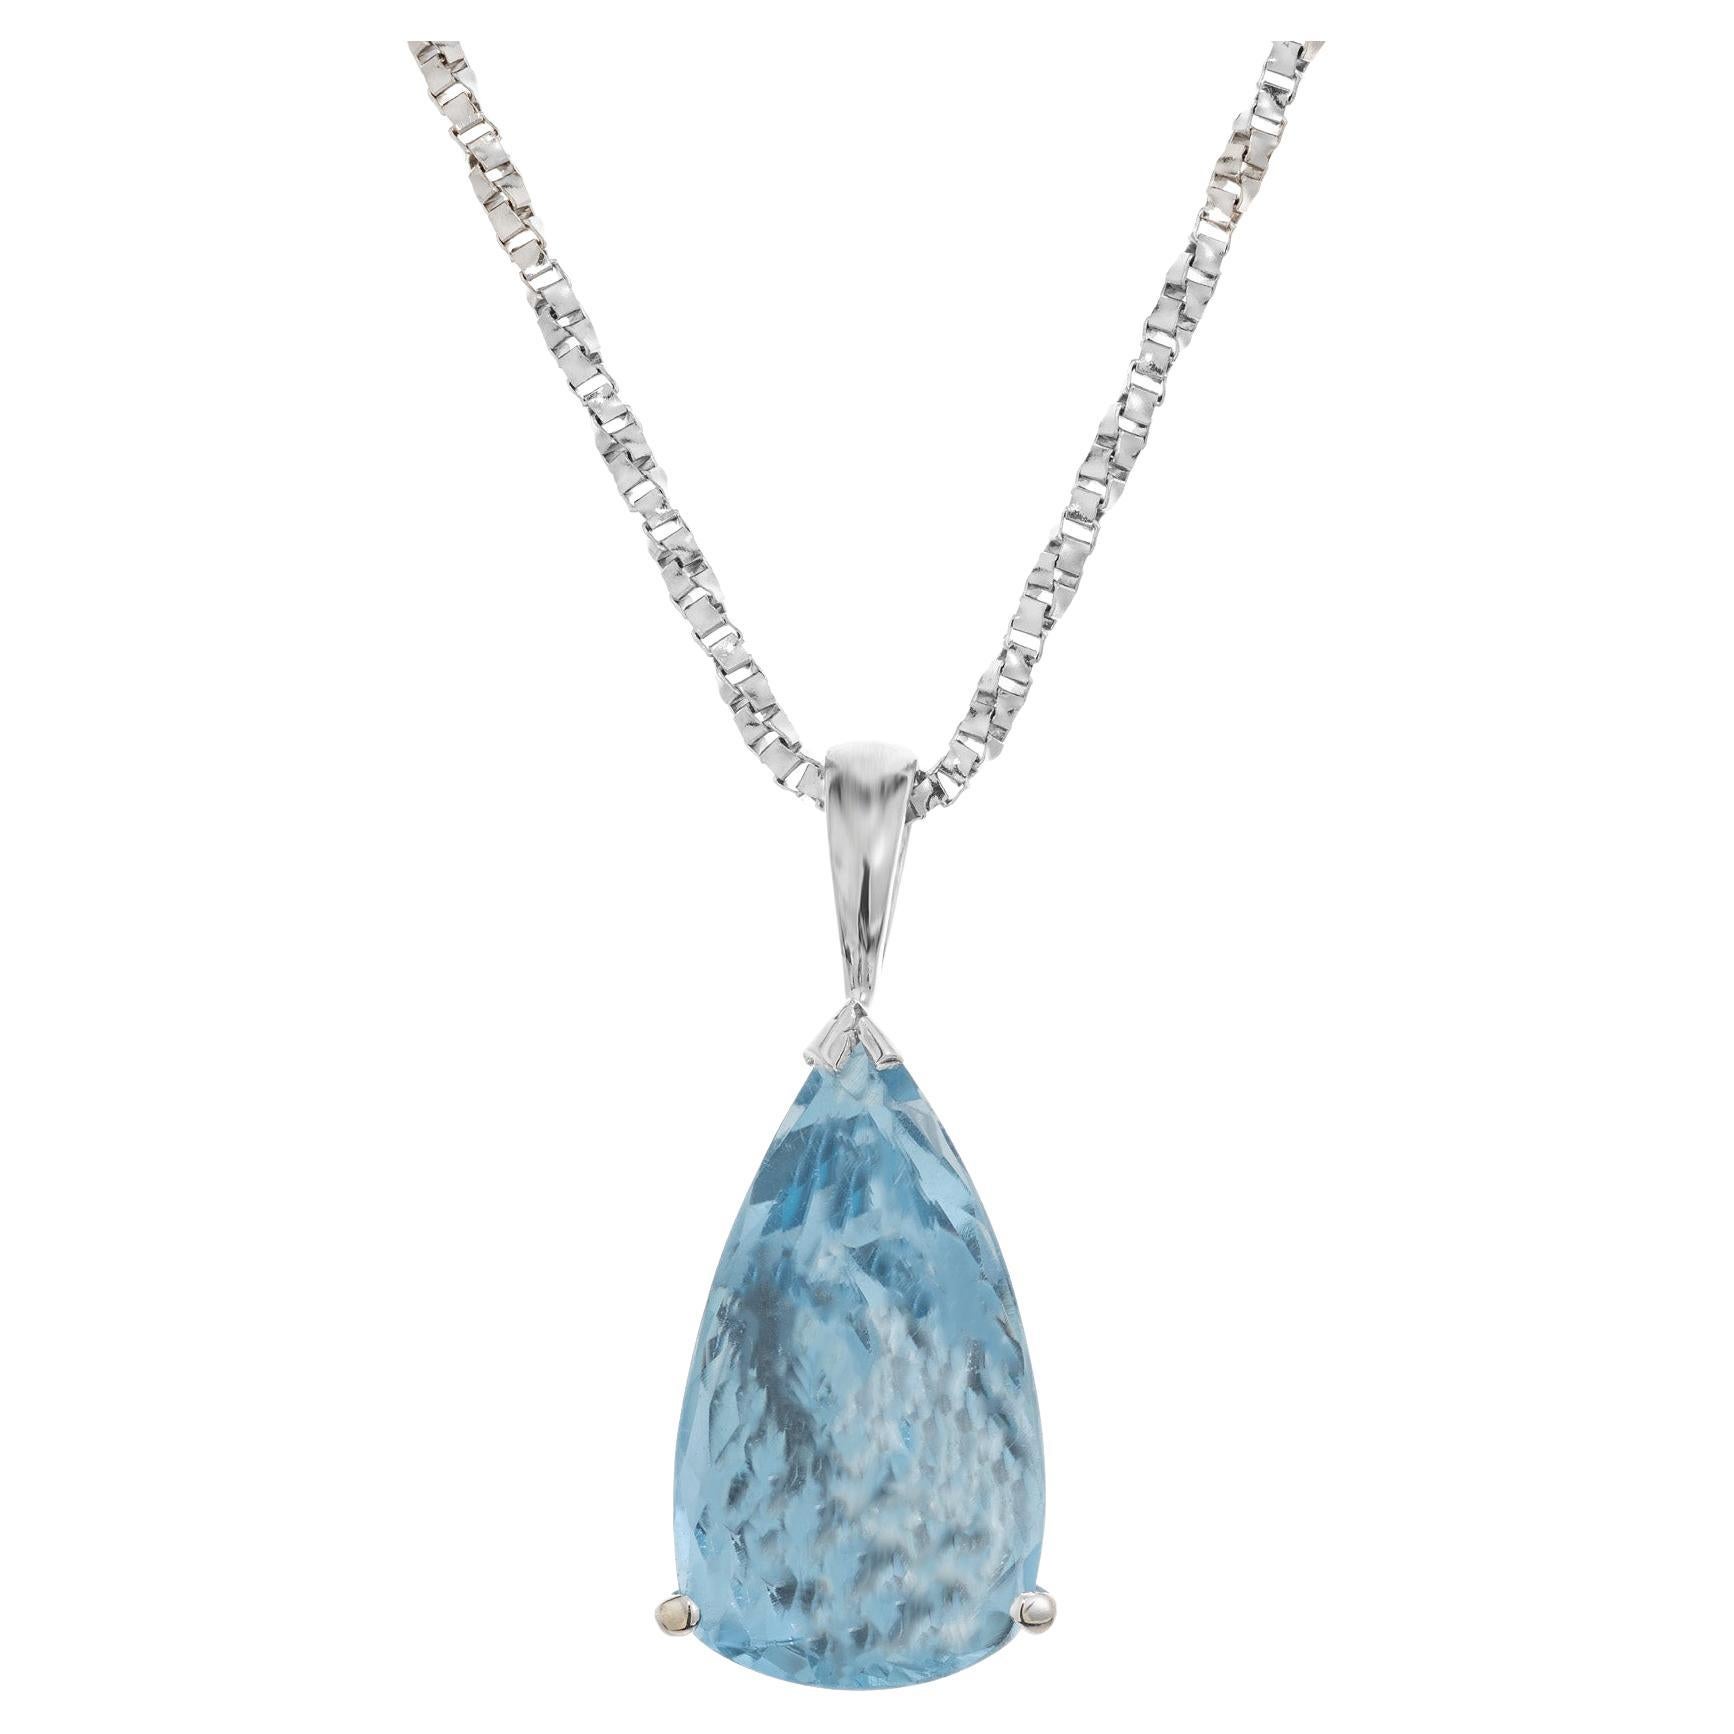 Peter Suchy 3.00 Carat Pear Shape Aquamarine White Gold Pendant Necklace  For Sale